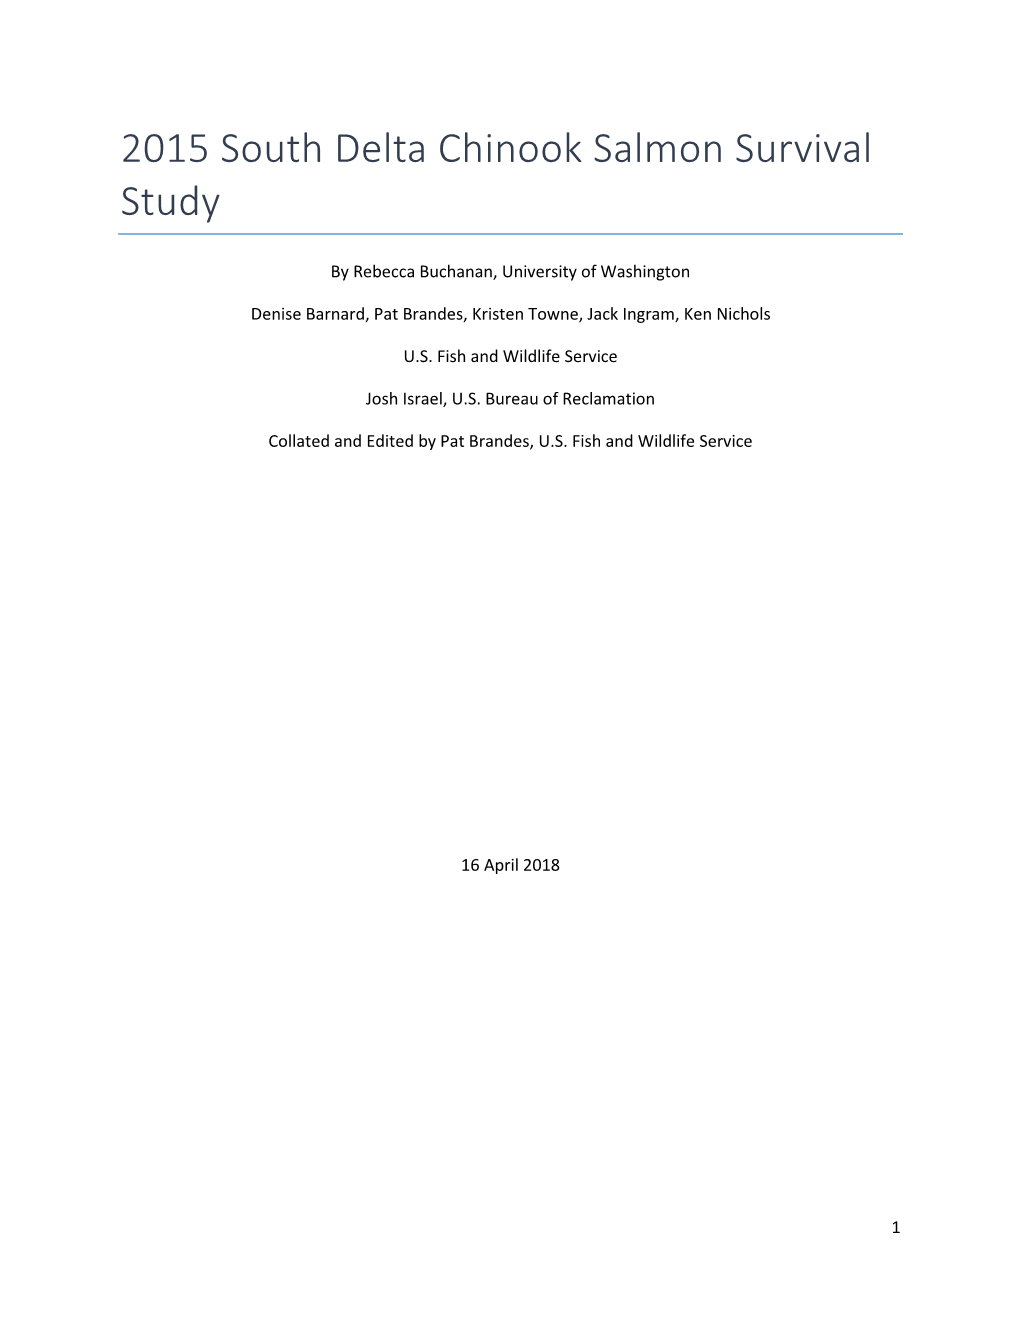 2015 South Delta Chinook Salmon Survival Study